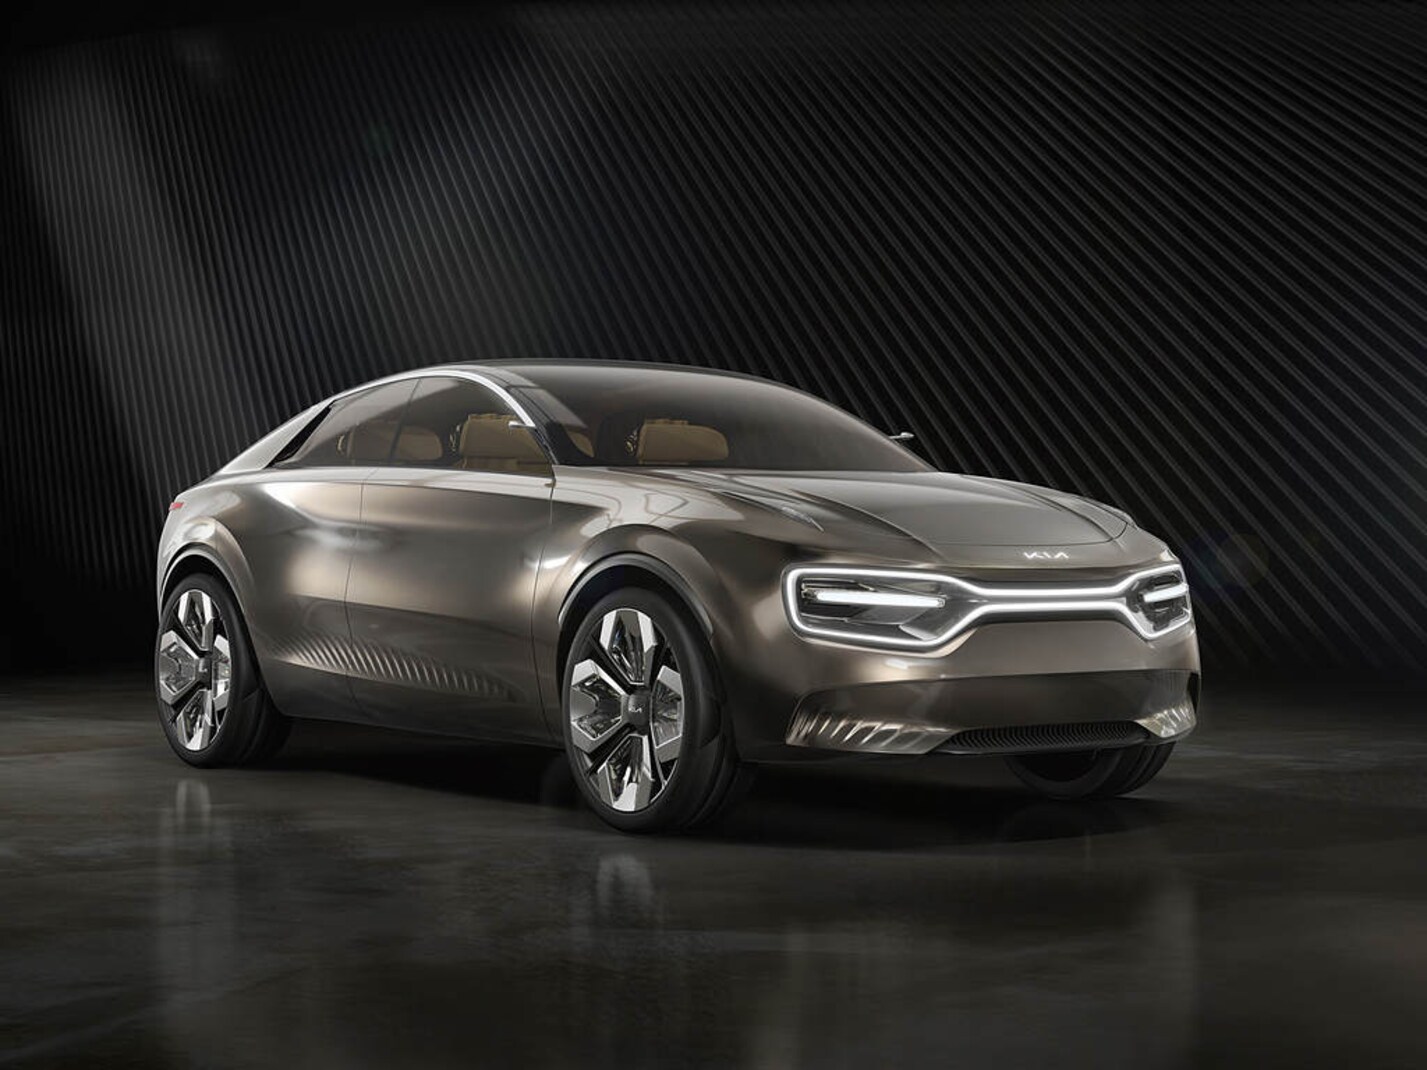 Kia shows off its Imagine EV crossover concept at the 2019 Geneva Motor Show.